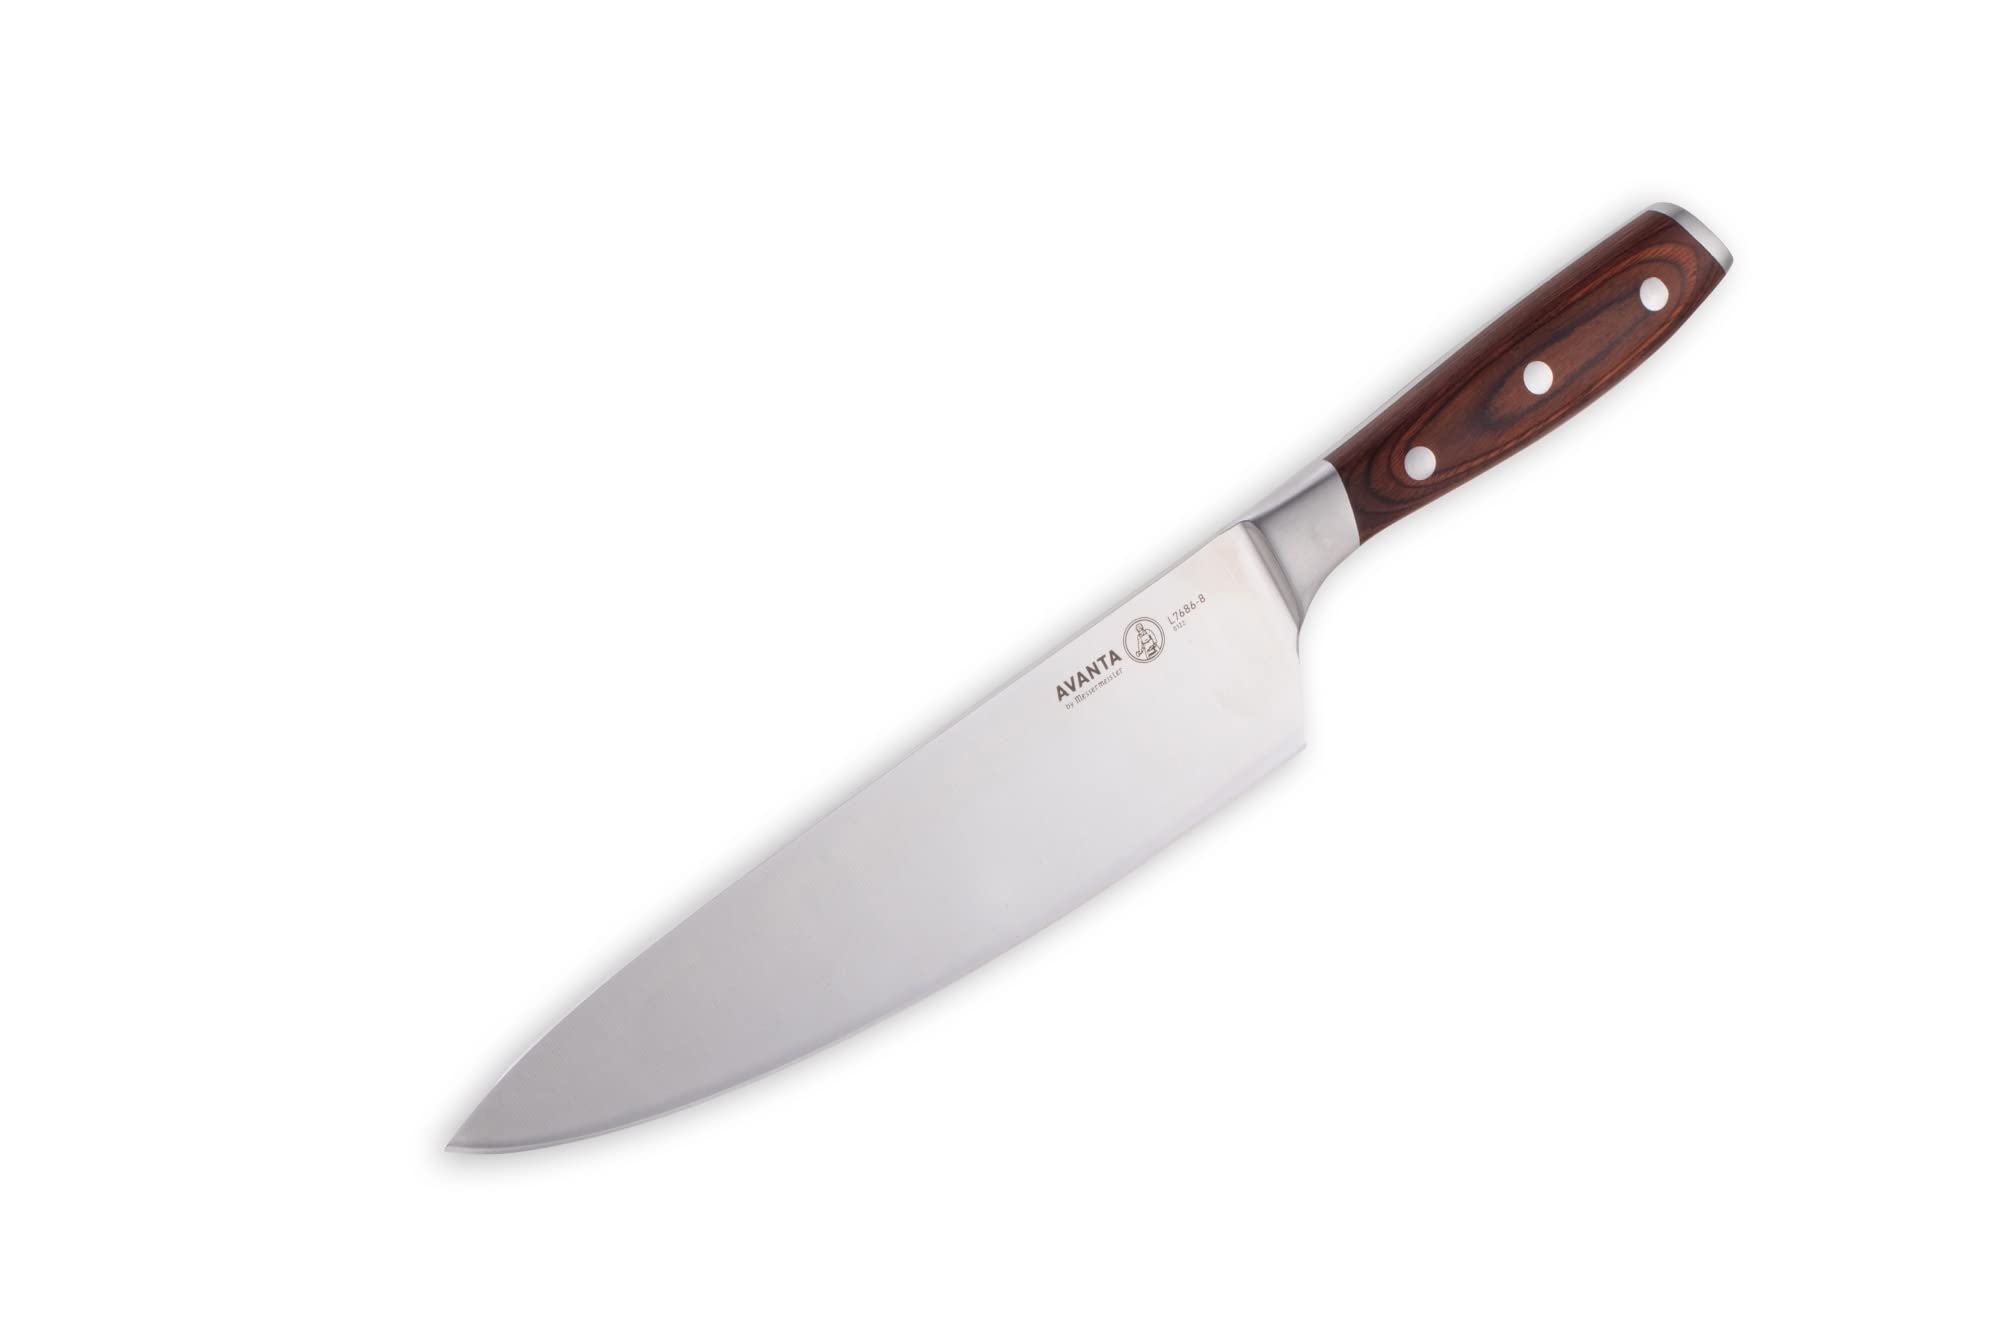 Messermeister Avanta 10-Piece Pakkawood Knife Block Set - German X50 Stainless Steel - Includes 4 Speciality Knives, Heavy-Weight Fork, 4 Steak Knives & Magnetic Knife Block